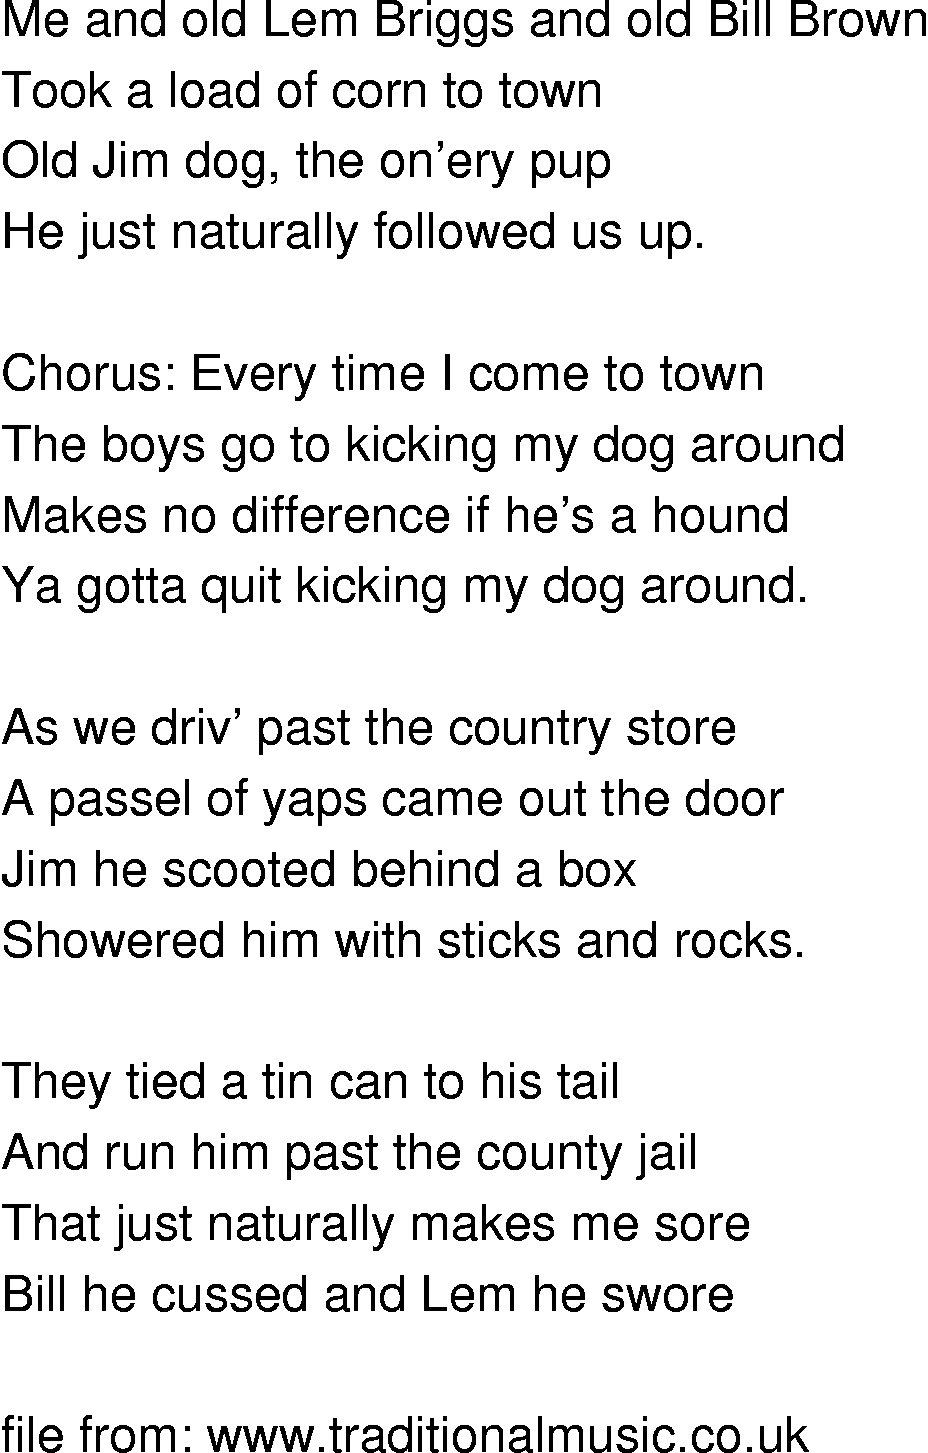 Old-Time (oldtimey) Song Lyrics - hound dog song